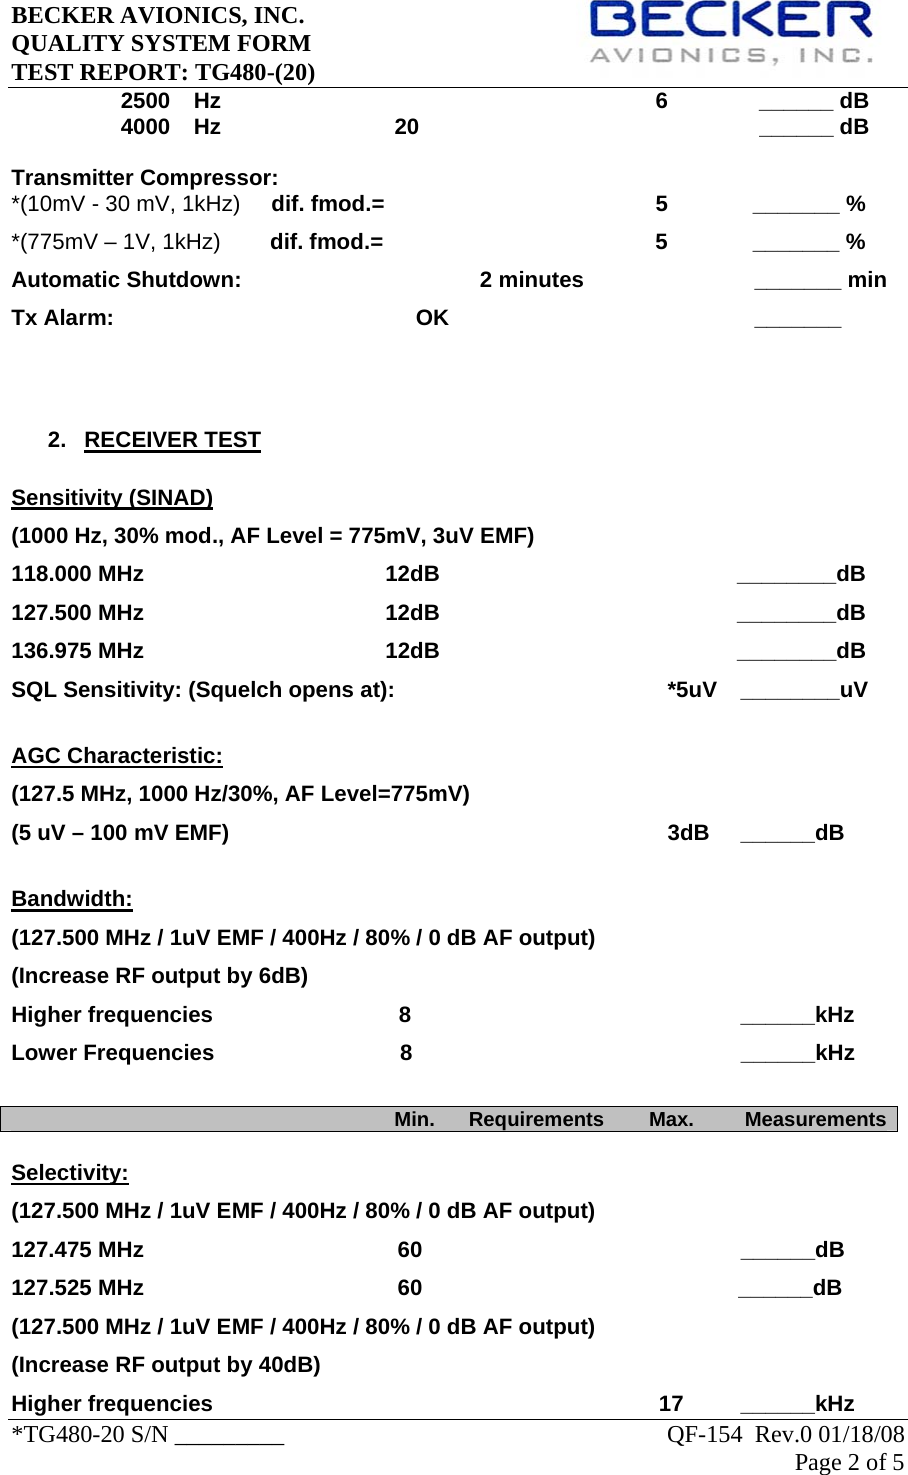 BECKER AVIONICS, INC.     QUALITY SYSTEM FORM TEST REPORT: TG480-(20)   *TG480-20 S/N _________                                                               QF-154  Rev.0 01/18/08 Page 2 of 5   2500    Hz      6     ______ dB 4000    Hz     20       ______ dB  Transmitter Compressor: *(10mV - 30 mV, 1kHz)     dif. fmod.=    5    _______ % *(775mV – 1V, 1kHz)        dif. fmod.=    5    _______ % Automatic Shutdown:           2 minutes                  _______ min Tx Alarm:                                  OK                    _______    2. RECEIVER TEST  Sensitivity (SINAD) (1000 Hz, 30% mod., AF Level = 775mV, 3uV EMF) 118.000 MHz                                       12dB                                                ________dB 127.500 MHz                                       12dB                                                ________dB 136.975 MHz                                       12dB                                                ________dB SQL Sensitivity: (Squelch opens at):        *5uV  ________uV  AGC Characteristic: (127.5 MHz, 1000 Hz/30%, AF Level=775mV) (5 uV – 100 mV EMF)             3dB  ______dB  Bandwidth: (127.500 MHz / 1uV EMF / 400Hz / 80% / 0 dB AF output) (Increase RF output by 6dB) Higher frequencies                              8          ______kHz Lower Frequencies                              8                                                     ______kHz                                                                      Min.      Requirements        Max.         Measurements Selectivity: (127.500 MHz / 1uV EMF / 400Hz / 80% / 0 dB AF output)  127.475 MHz                                         60          ______dB 127.525 MHz                                         60                                                   ______dB (127.500 MHz / 1uV EMF / 400Hz / 80% / 0 dB AF output)  (Increase RF output by 40dB) Higher frequencies                                                                        17  ______kHz 